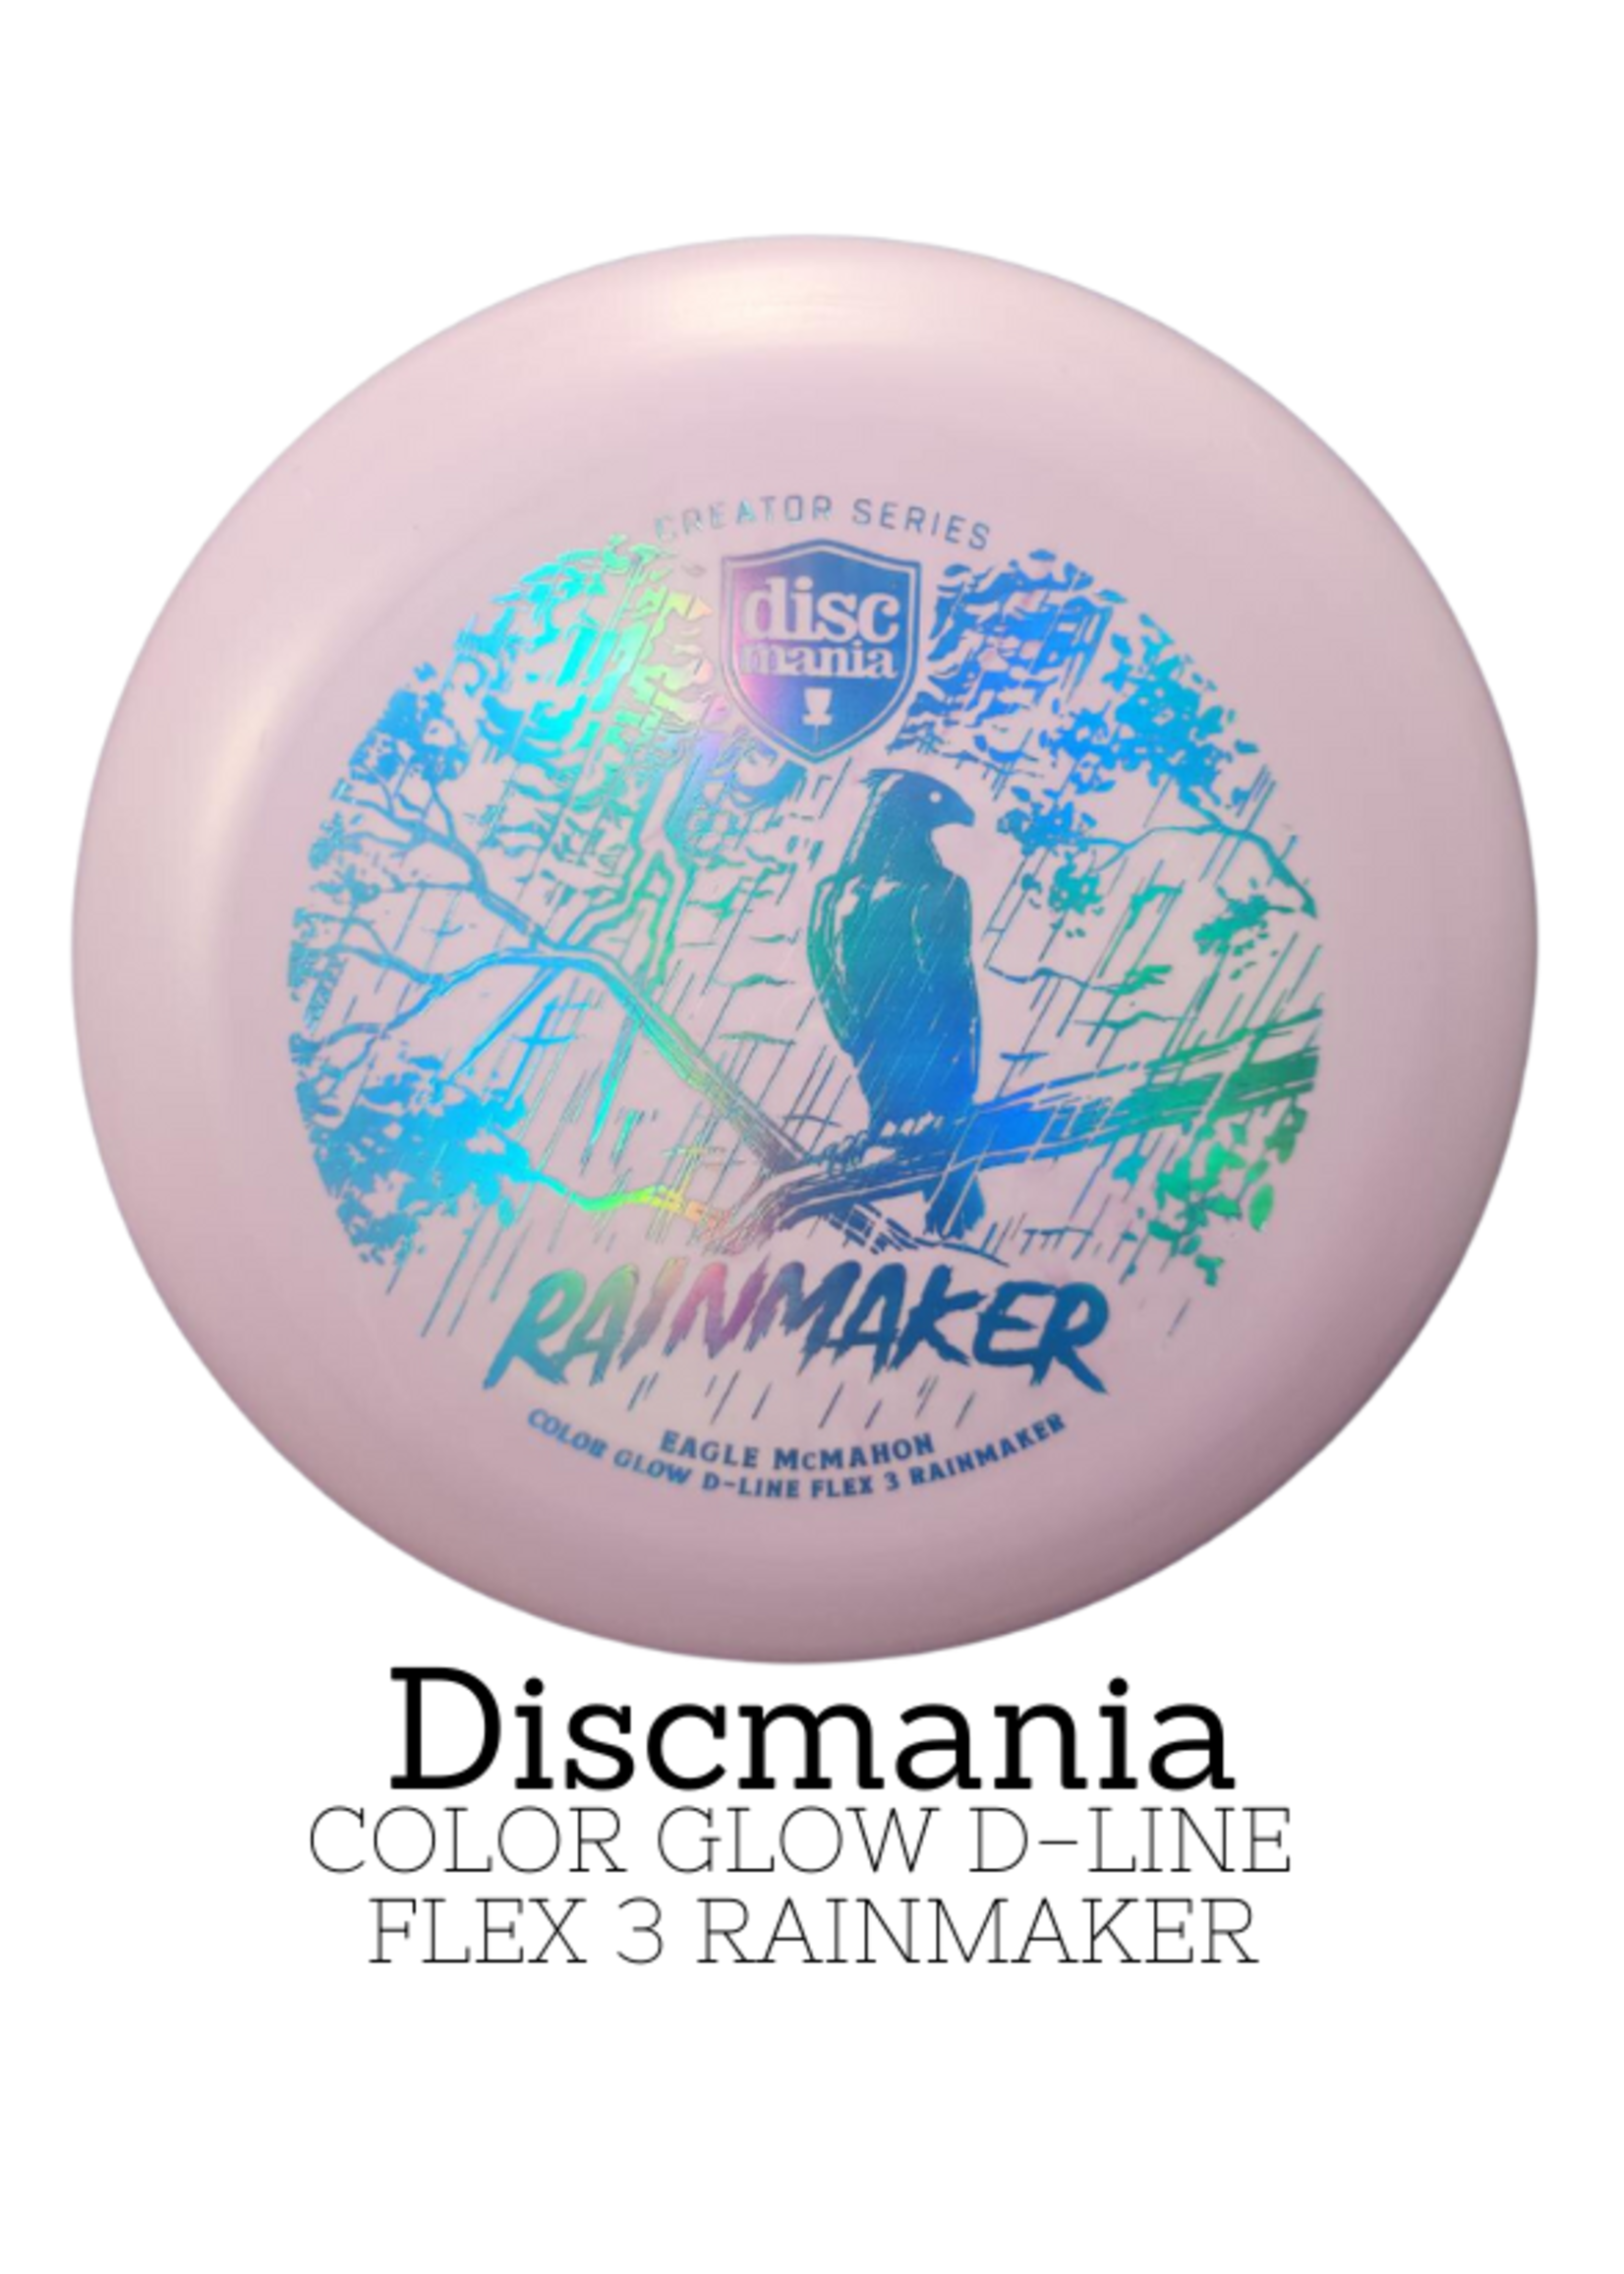 Discmania Discmania EAGLE MCMAHON CREATOR SERIES COLOR GLOW D-LINE RAINMAKER (FLEX 3)